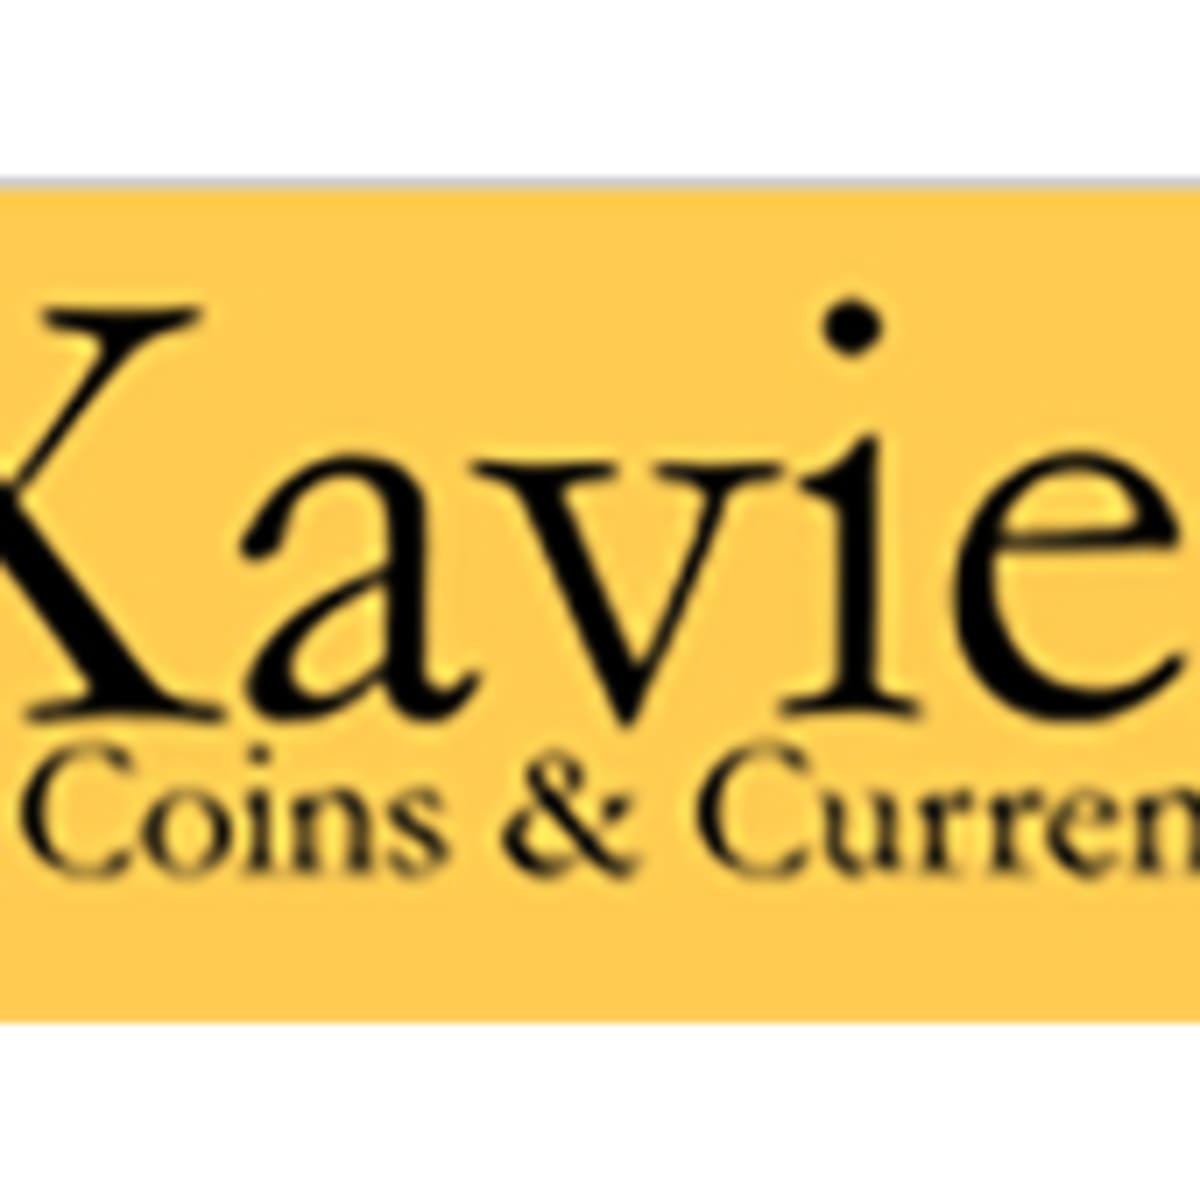 Xavier Coins & Currency, E Main St, Suite , Mesa, AZ - MapQuest